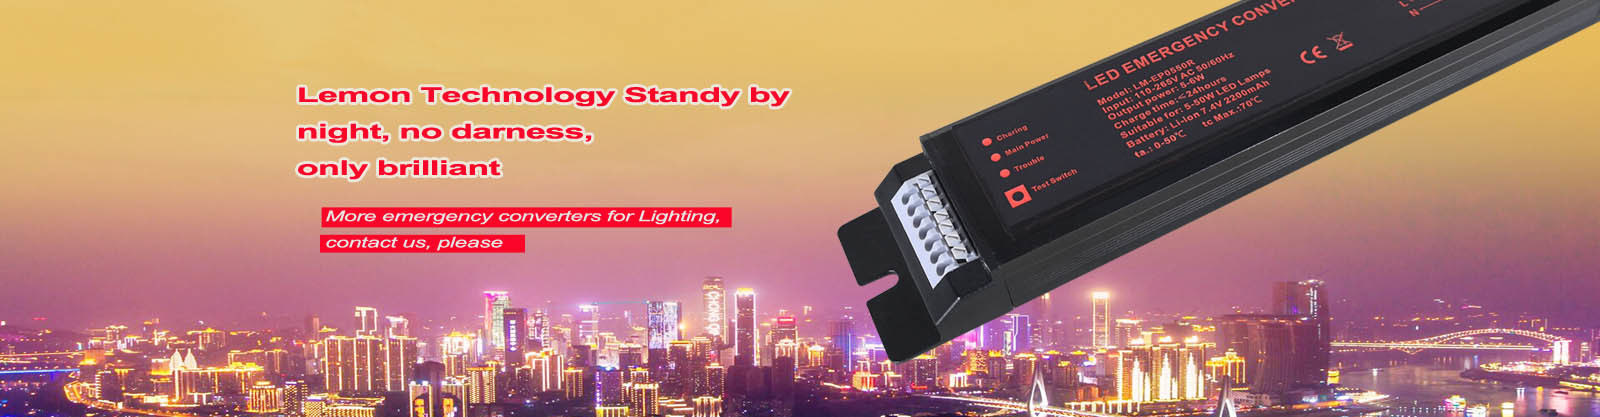 quality LED Emergency Light factory